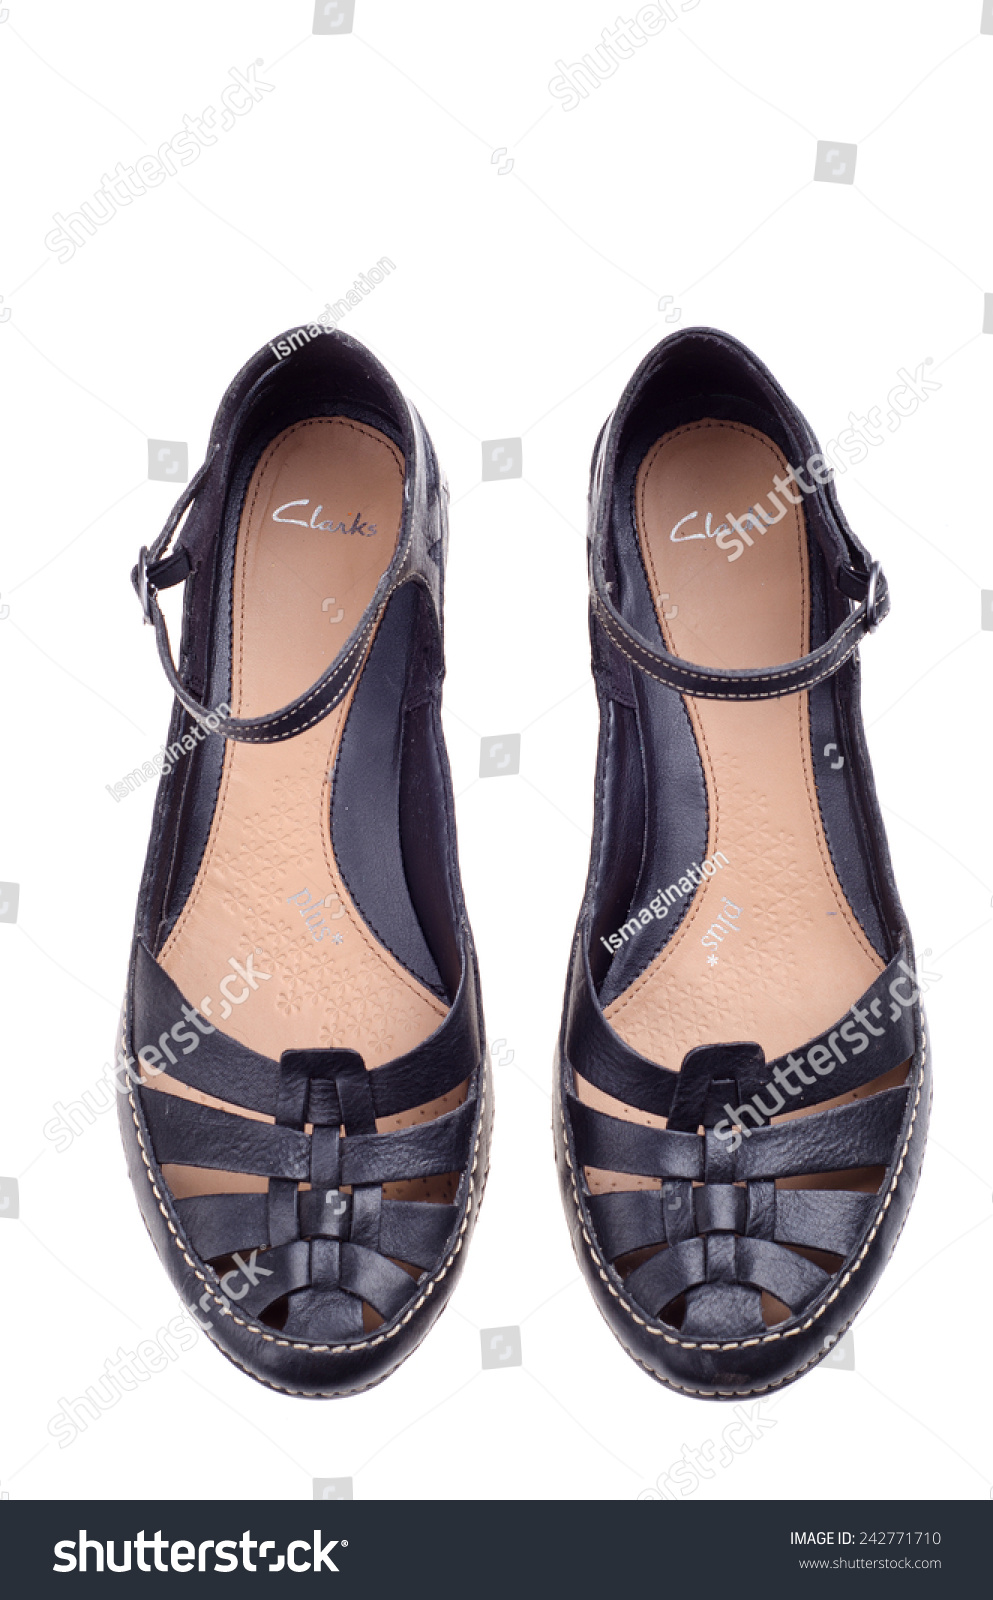 clarks shoes black friday sale 2015